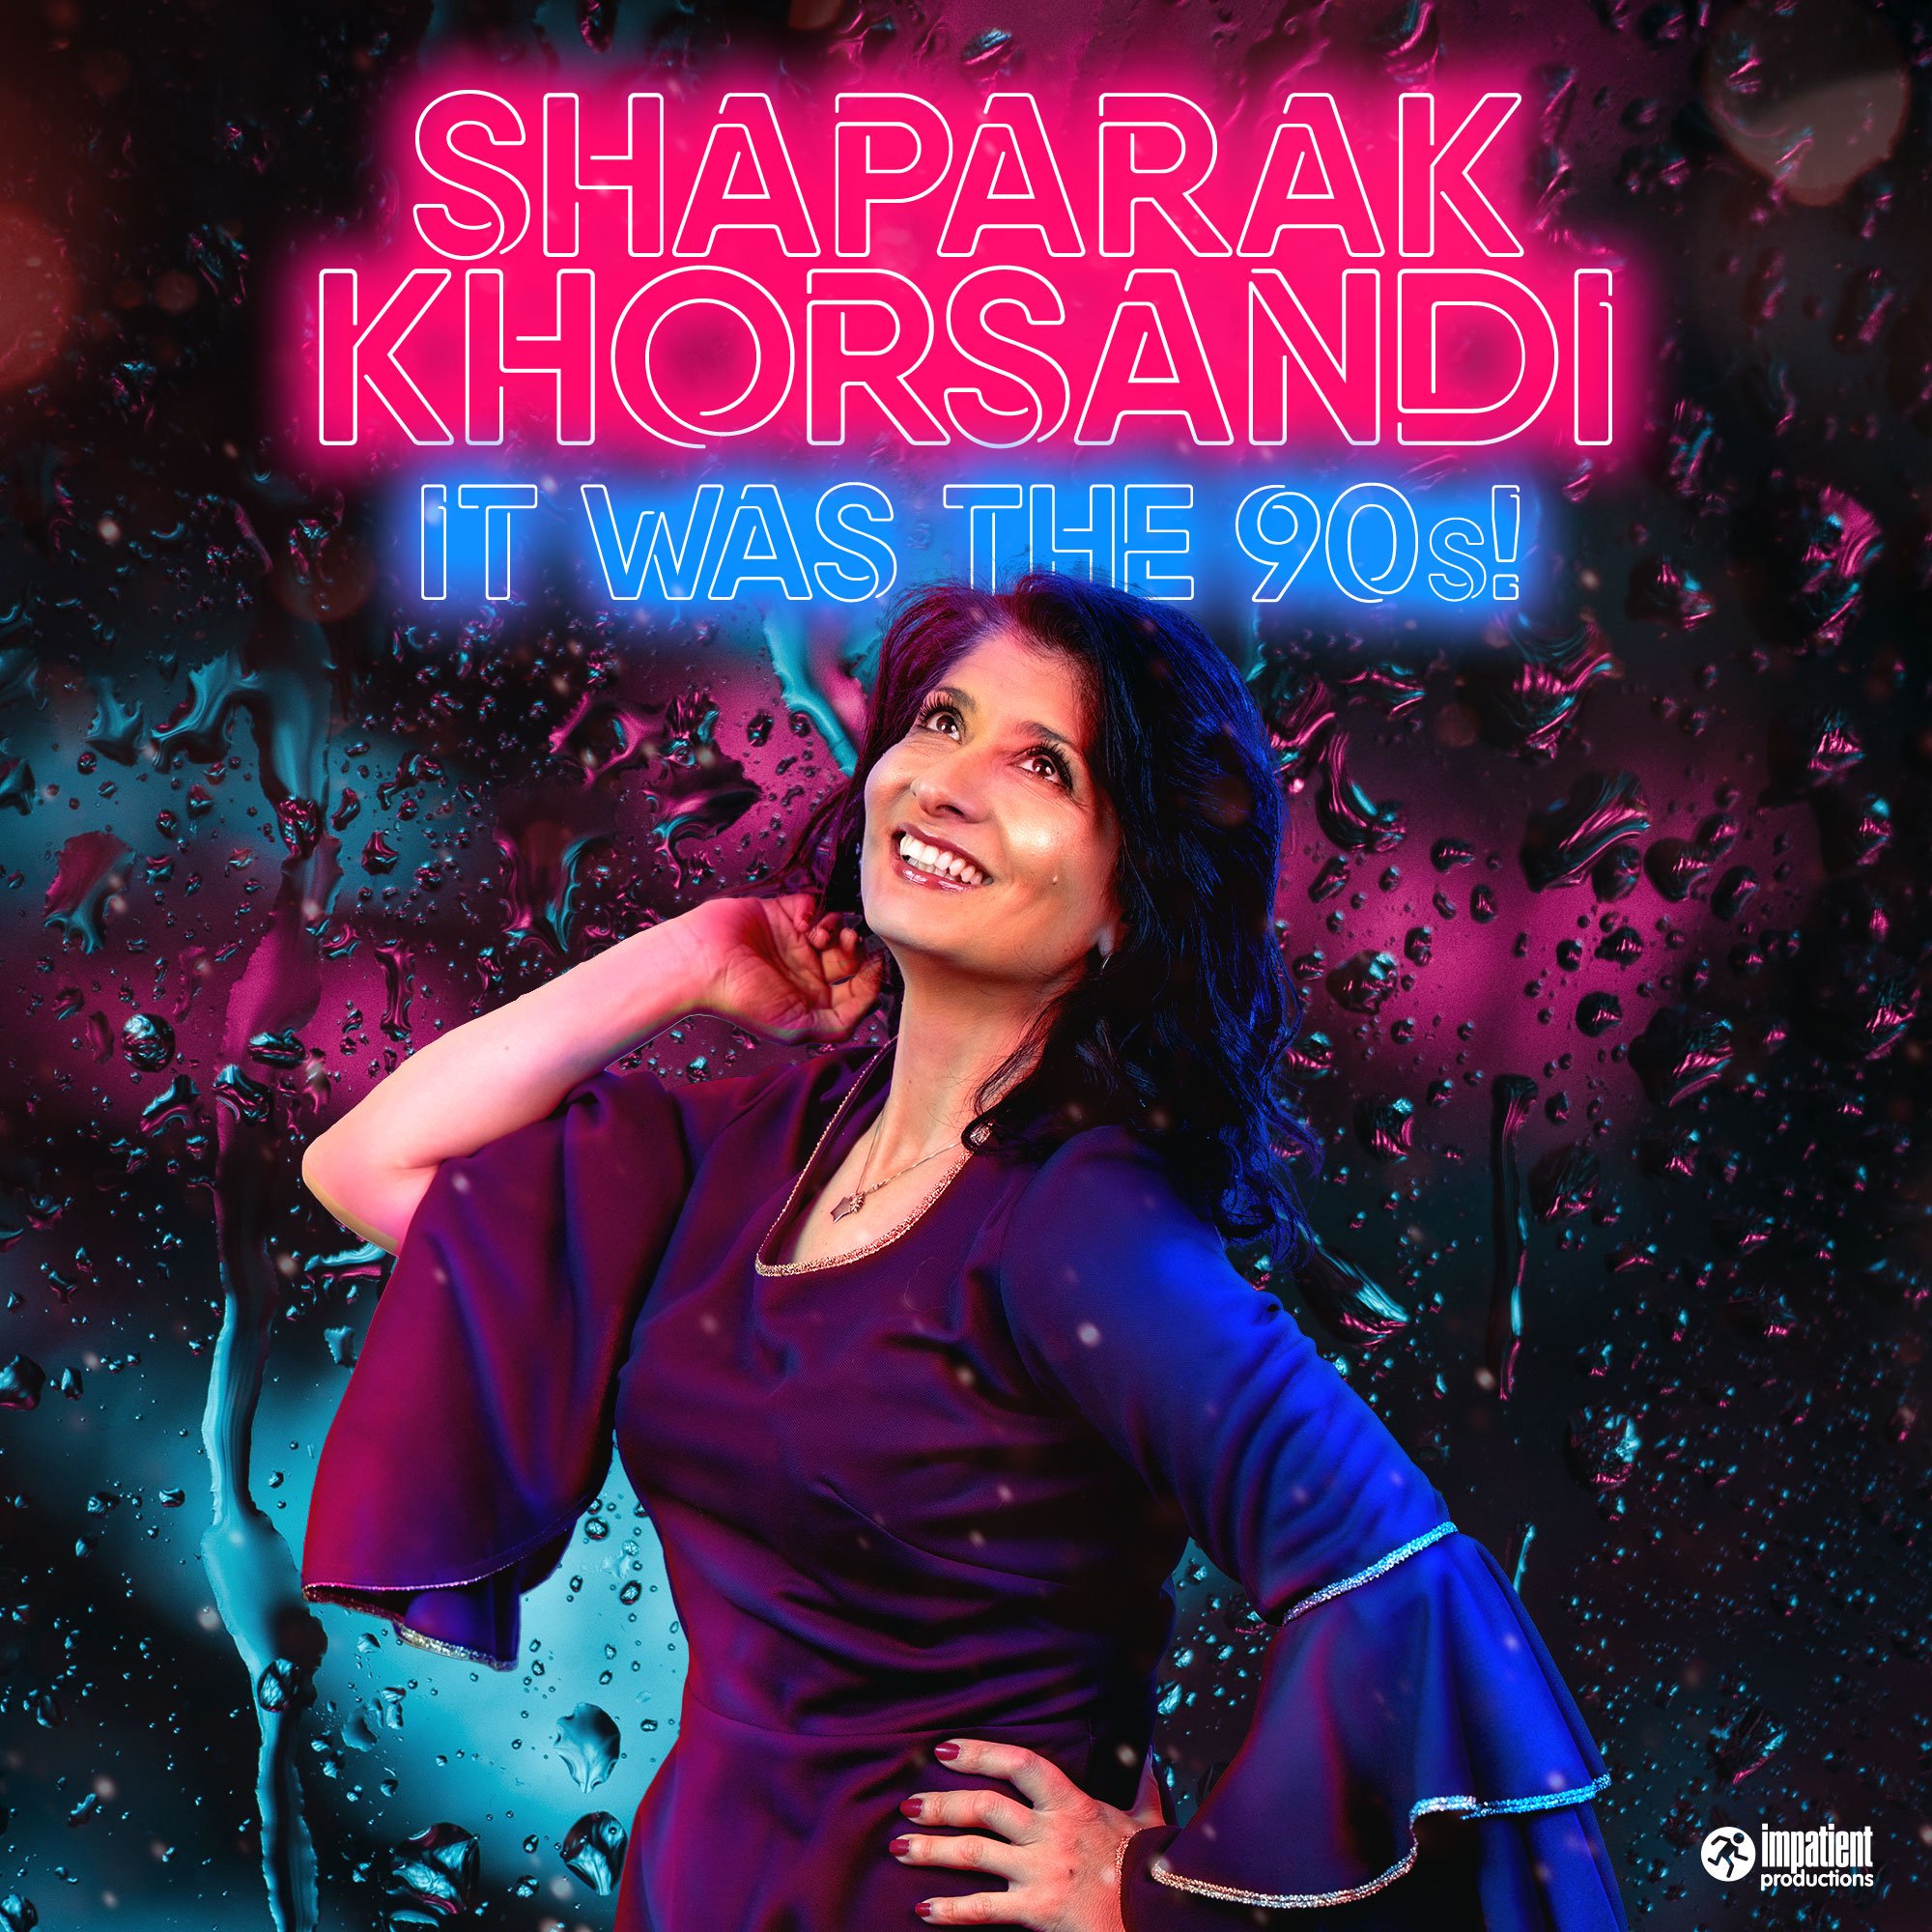 shaparak khorsandi | it was the 90s!